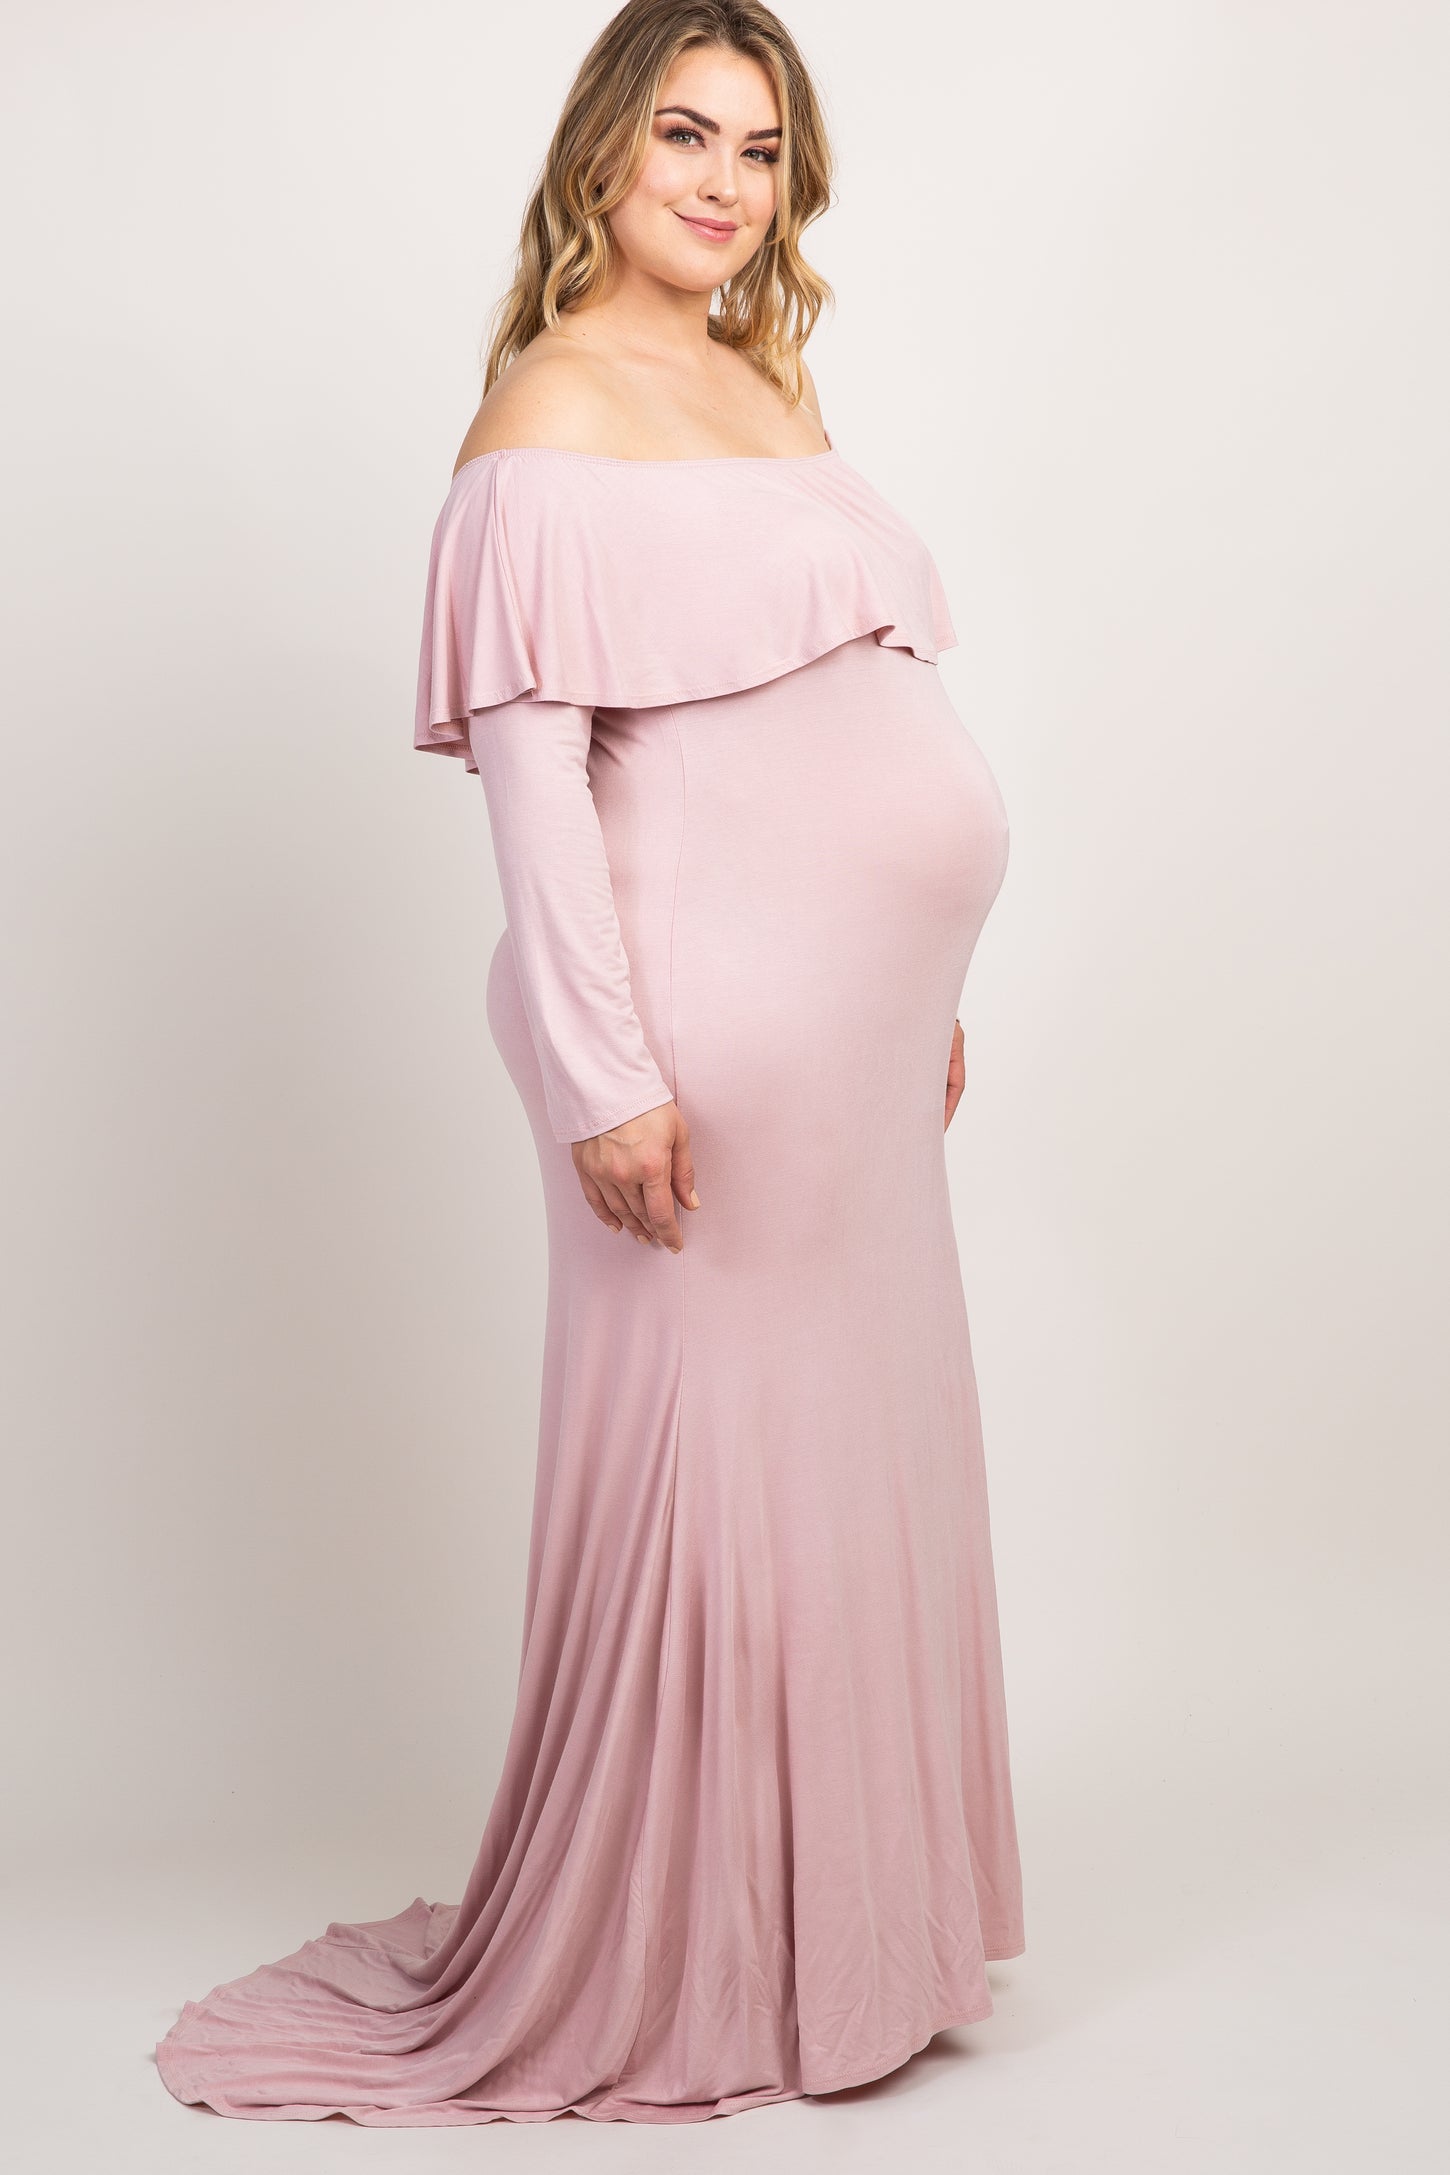 PinkBlush Mauve Off Shoulder Ruffle Maternity Plus Photoshoot Gown/Dress